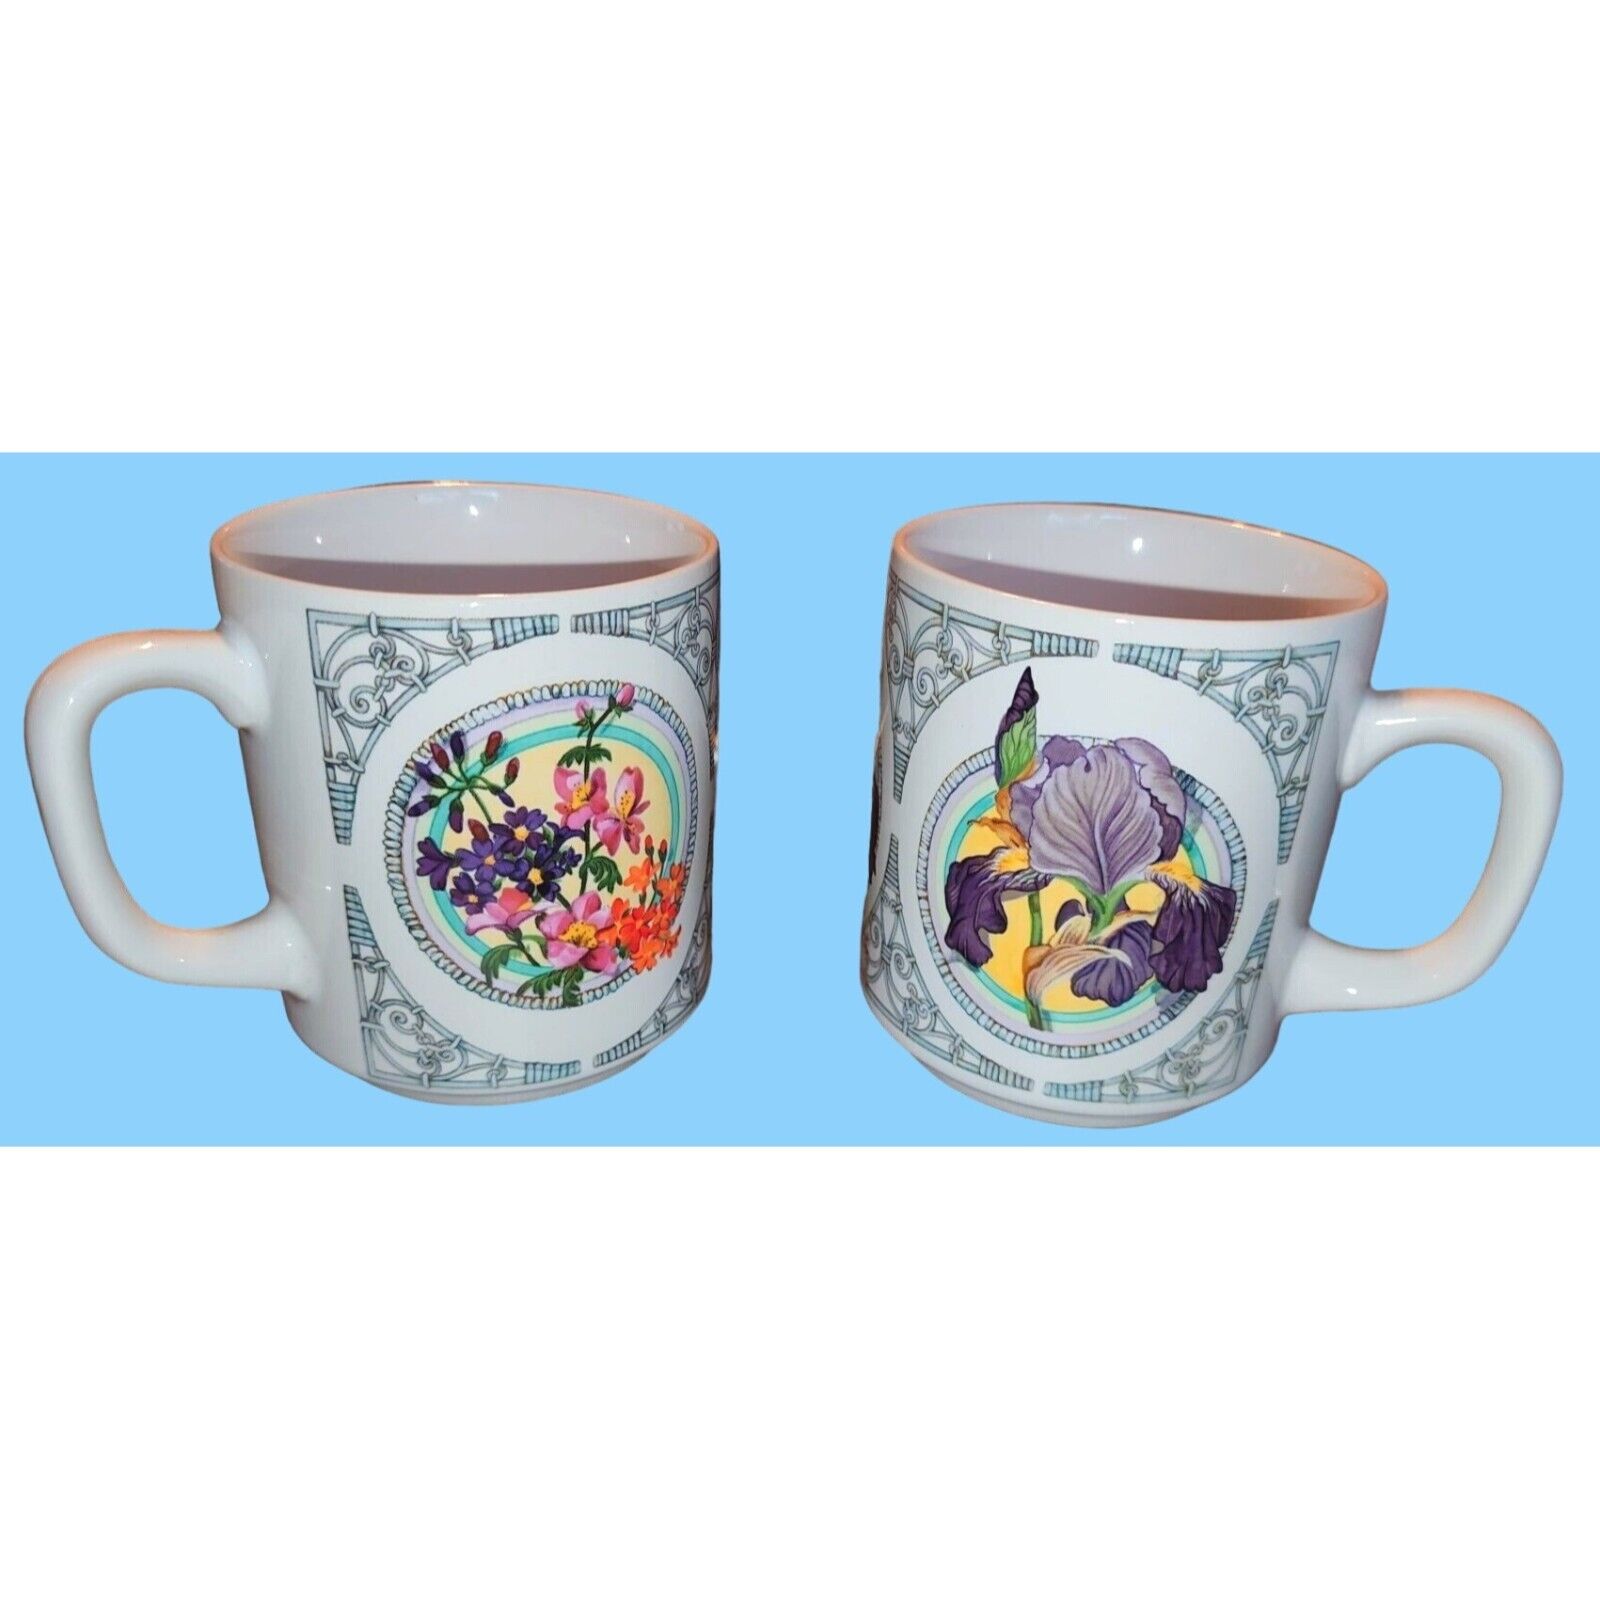 Pair Of Enesco Coffee Tea Mugs Floral Ceramic 12 oz Country Essence 1987 Mint Co